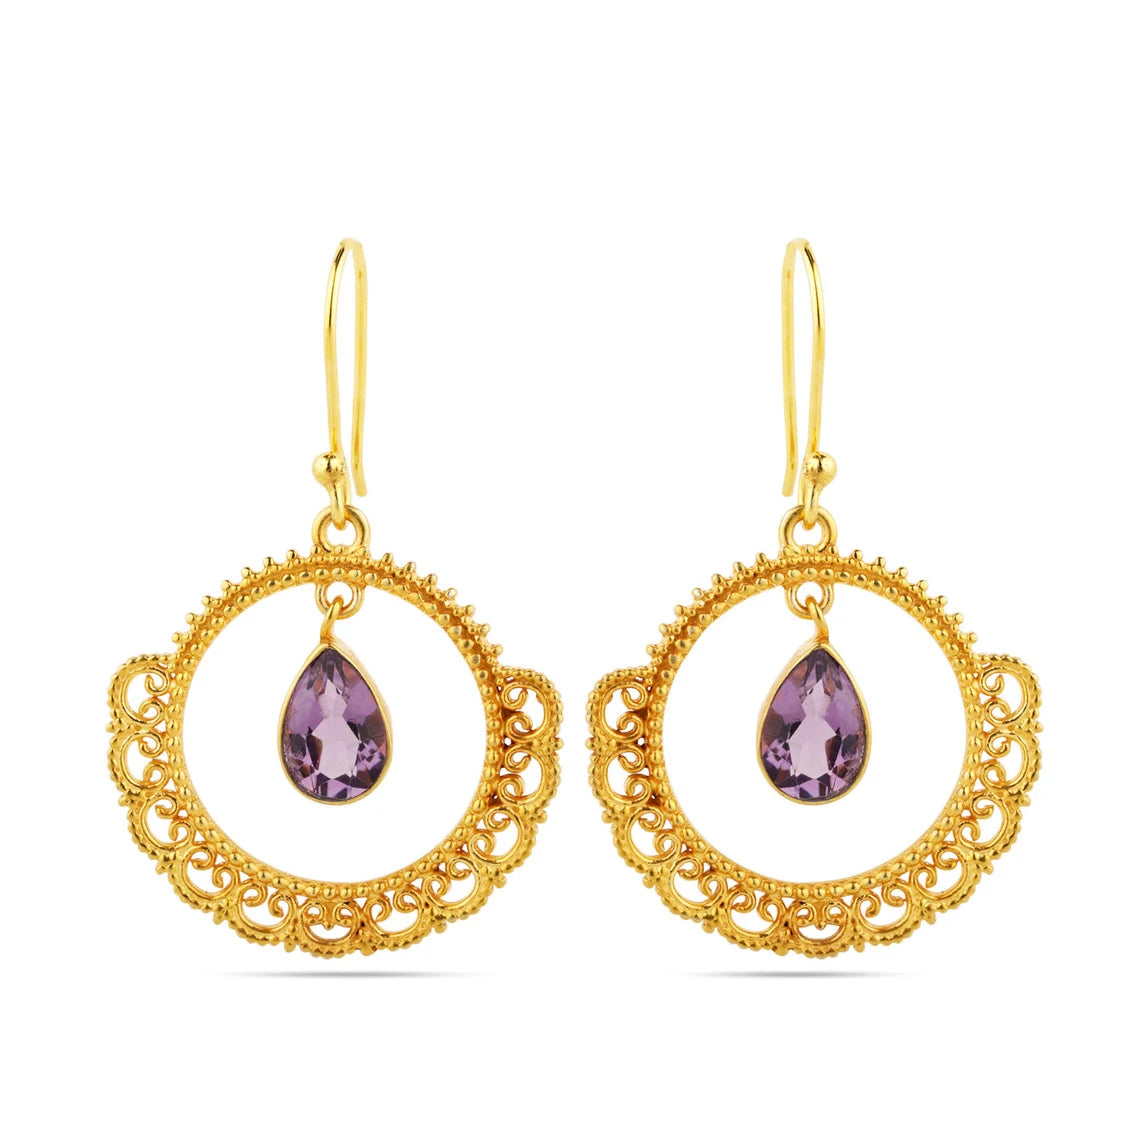 925 Silver Earrings with Gold Plating - Amethyst Earrings, February Birthstone